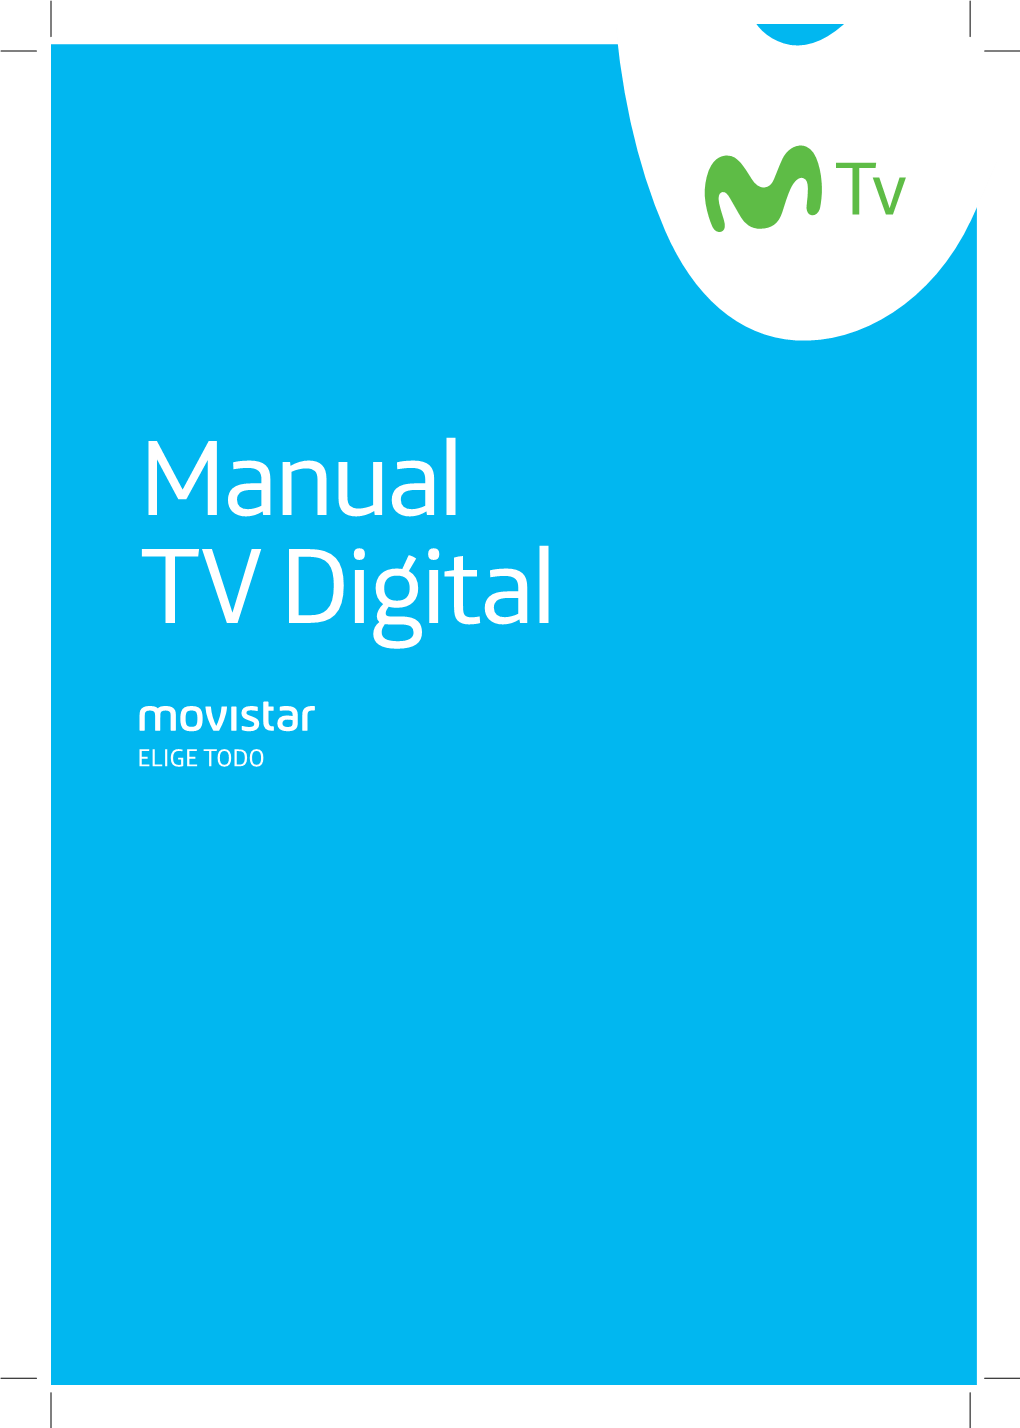 Manual TV Digital